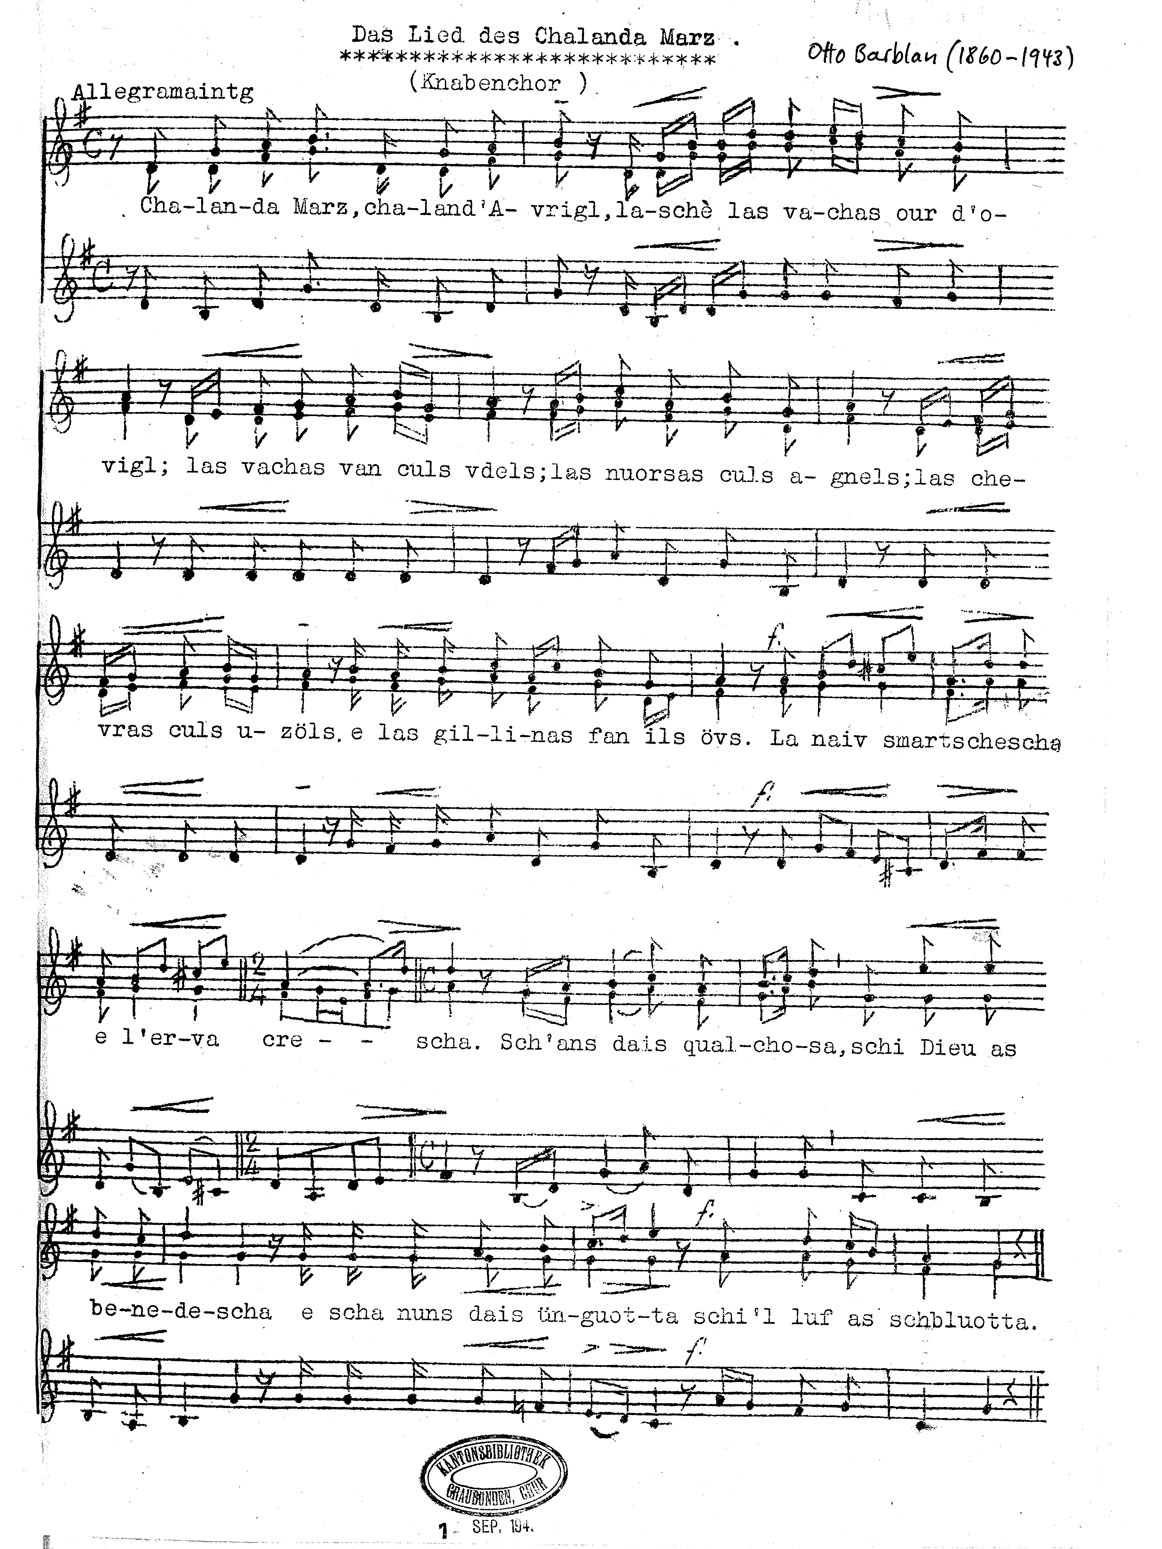 Una canzone di Chalandamarz di Otto Barblan © Kantonsbibliothek Graubünden